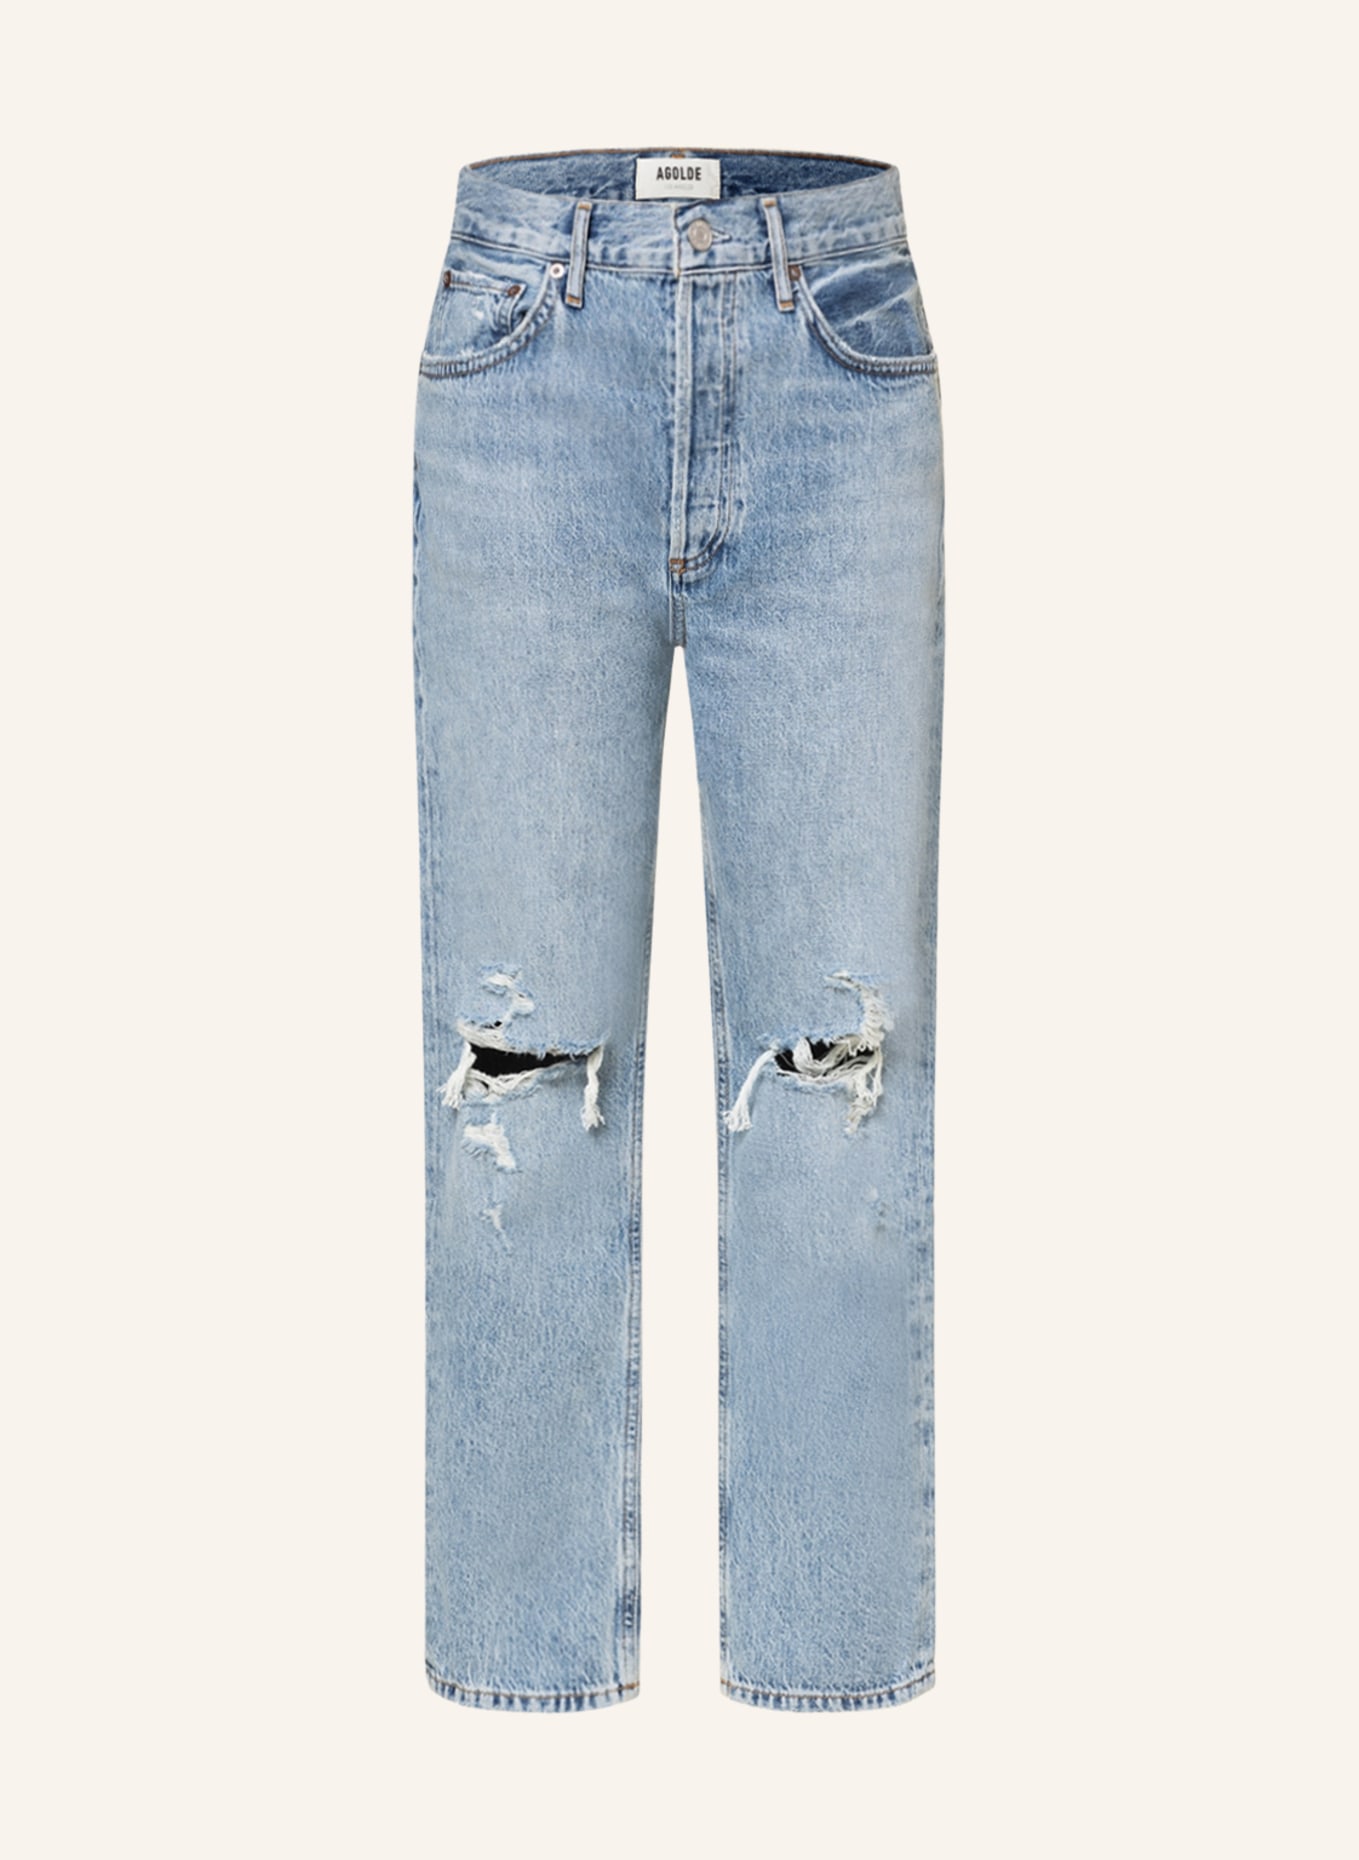 AGOLDE Destroyed Jeans RILEY CROP, Farbe: Blitz med indigo (Bild 1)